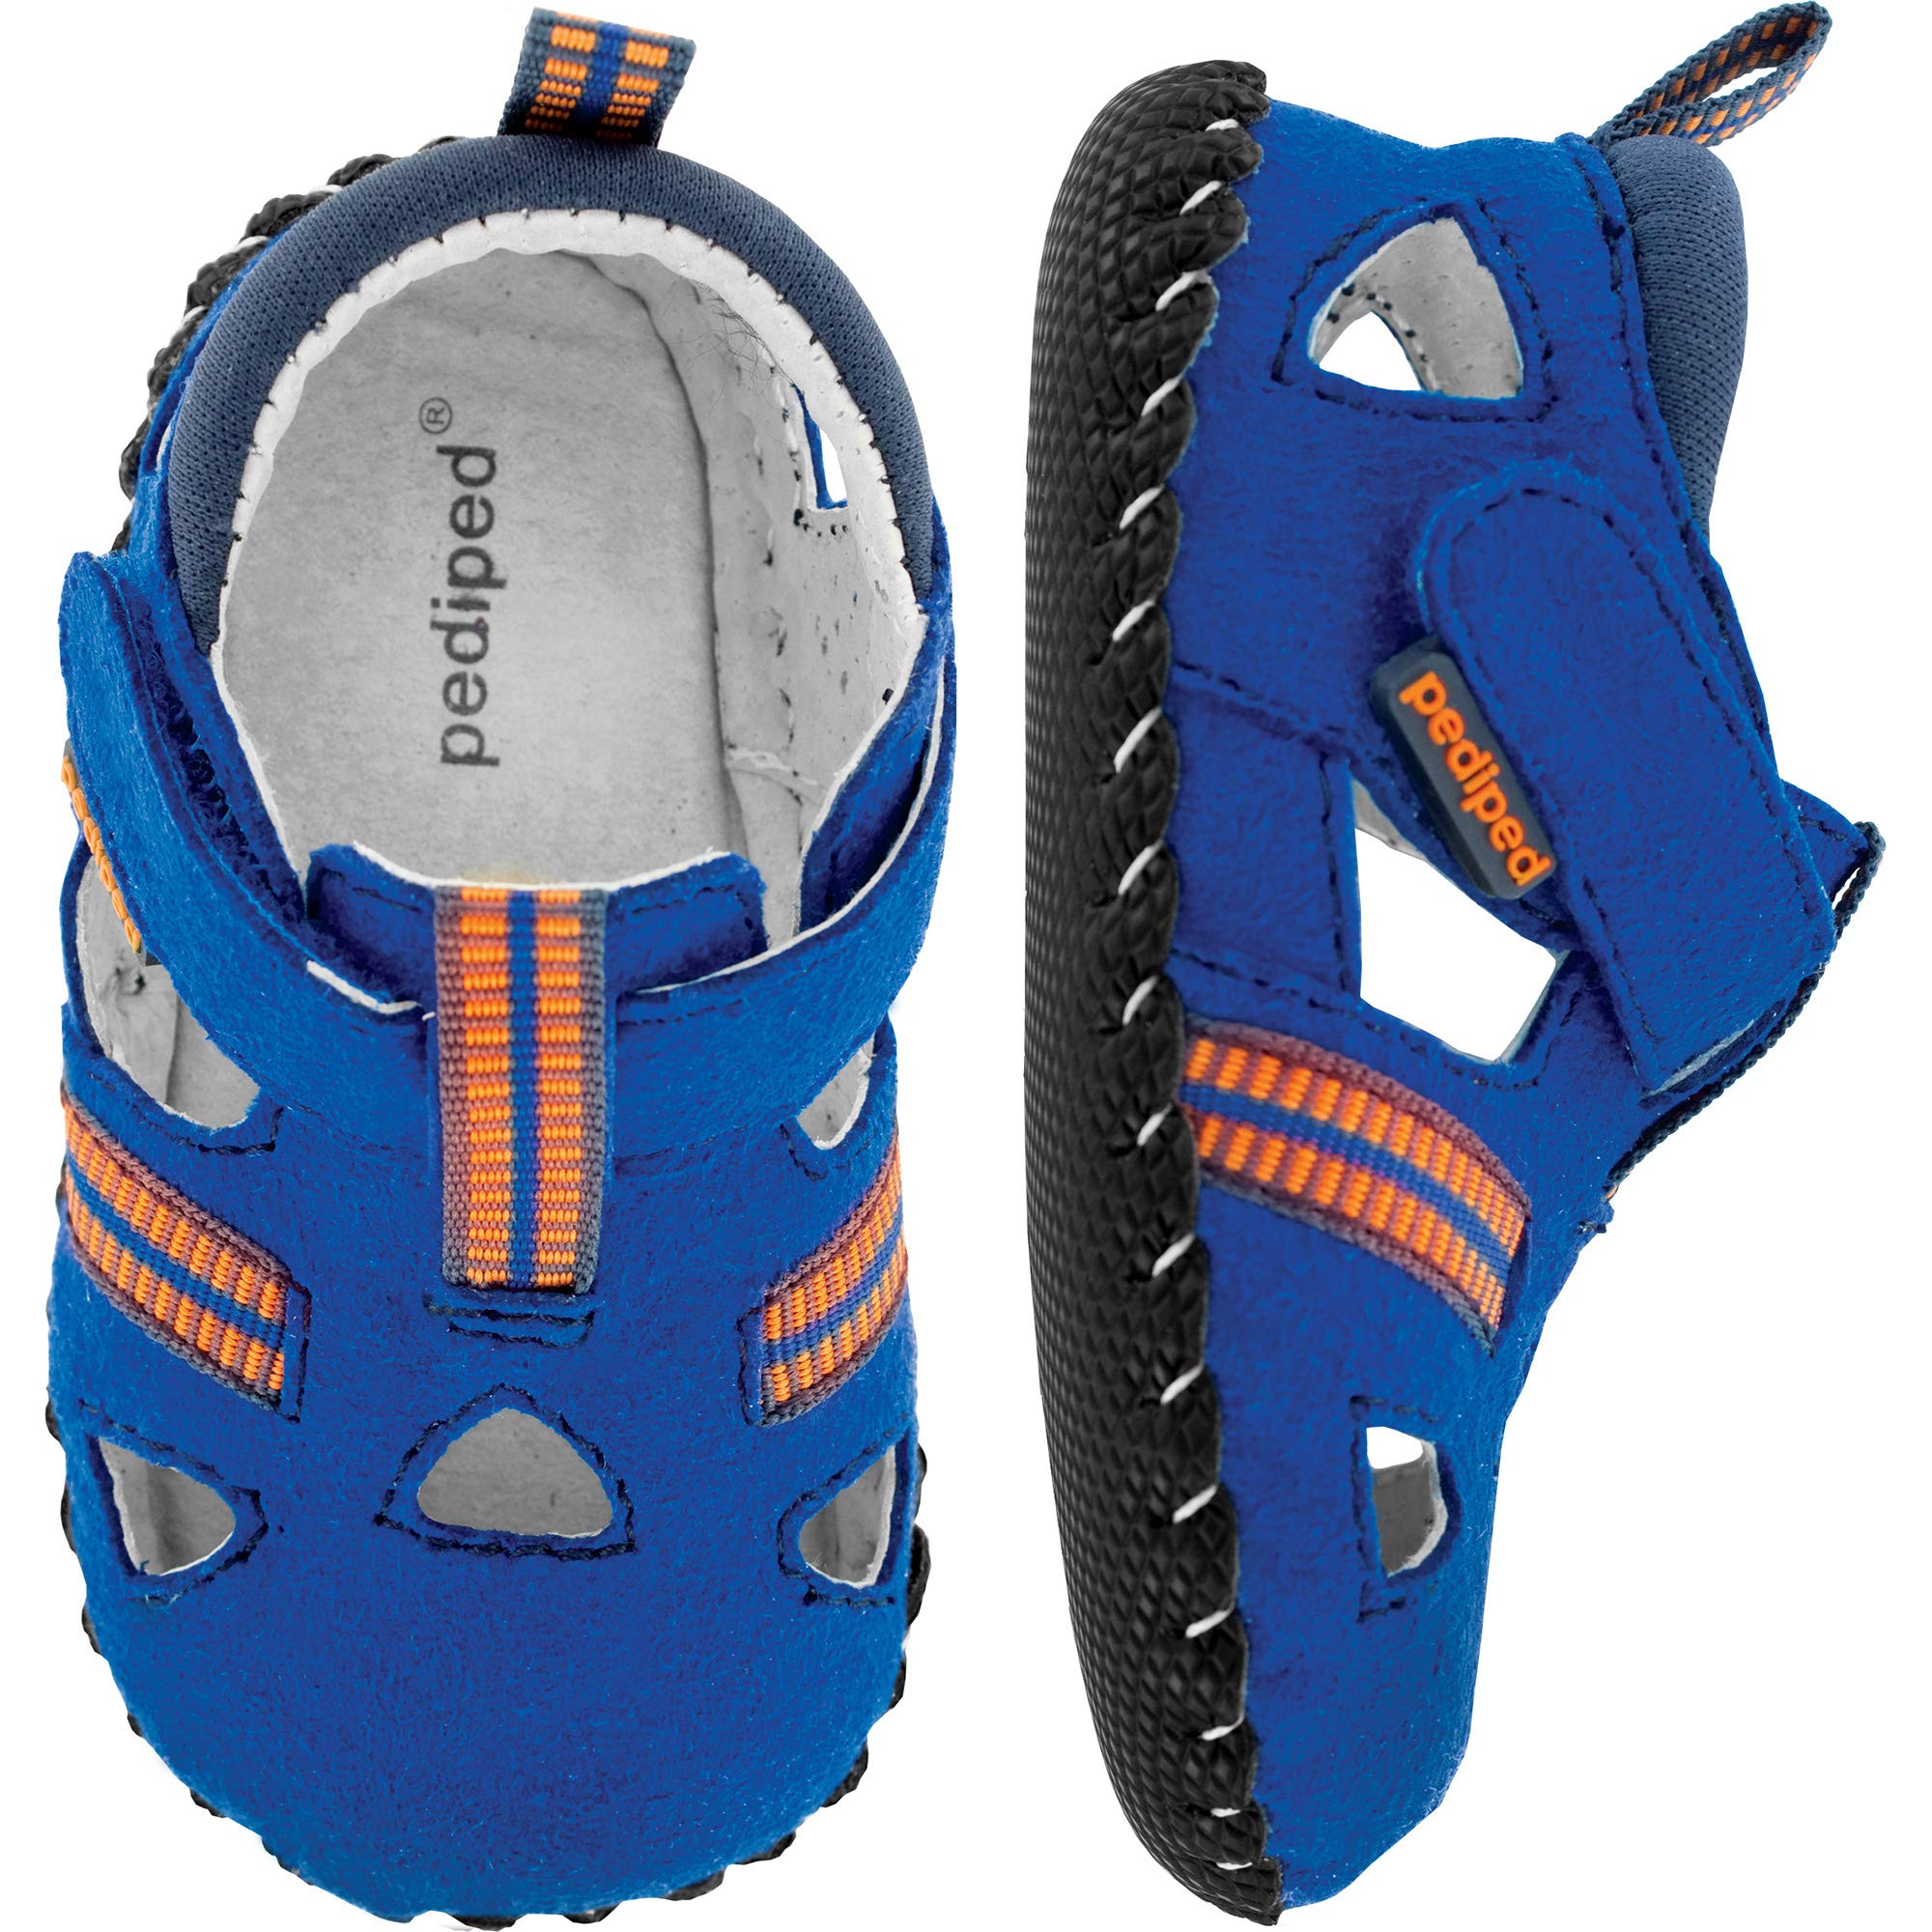 pediped Originals Amazon Sport Sandal (Infant)